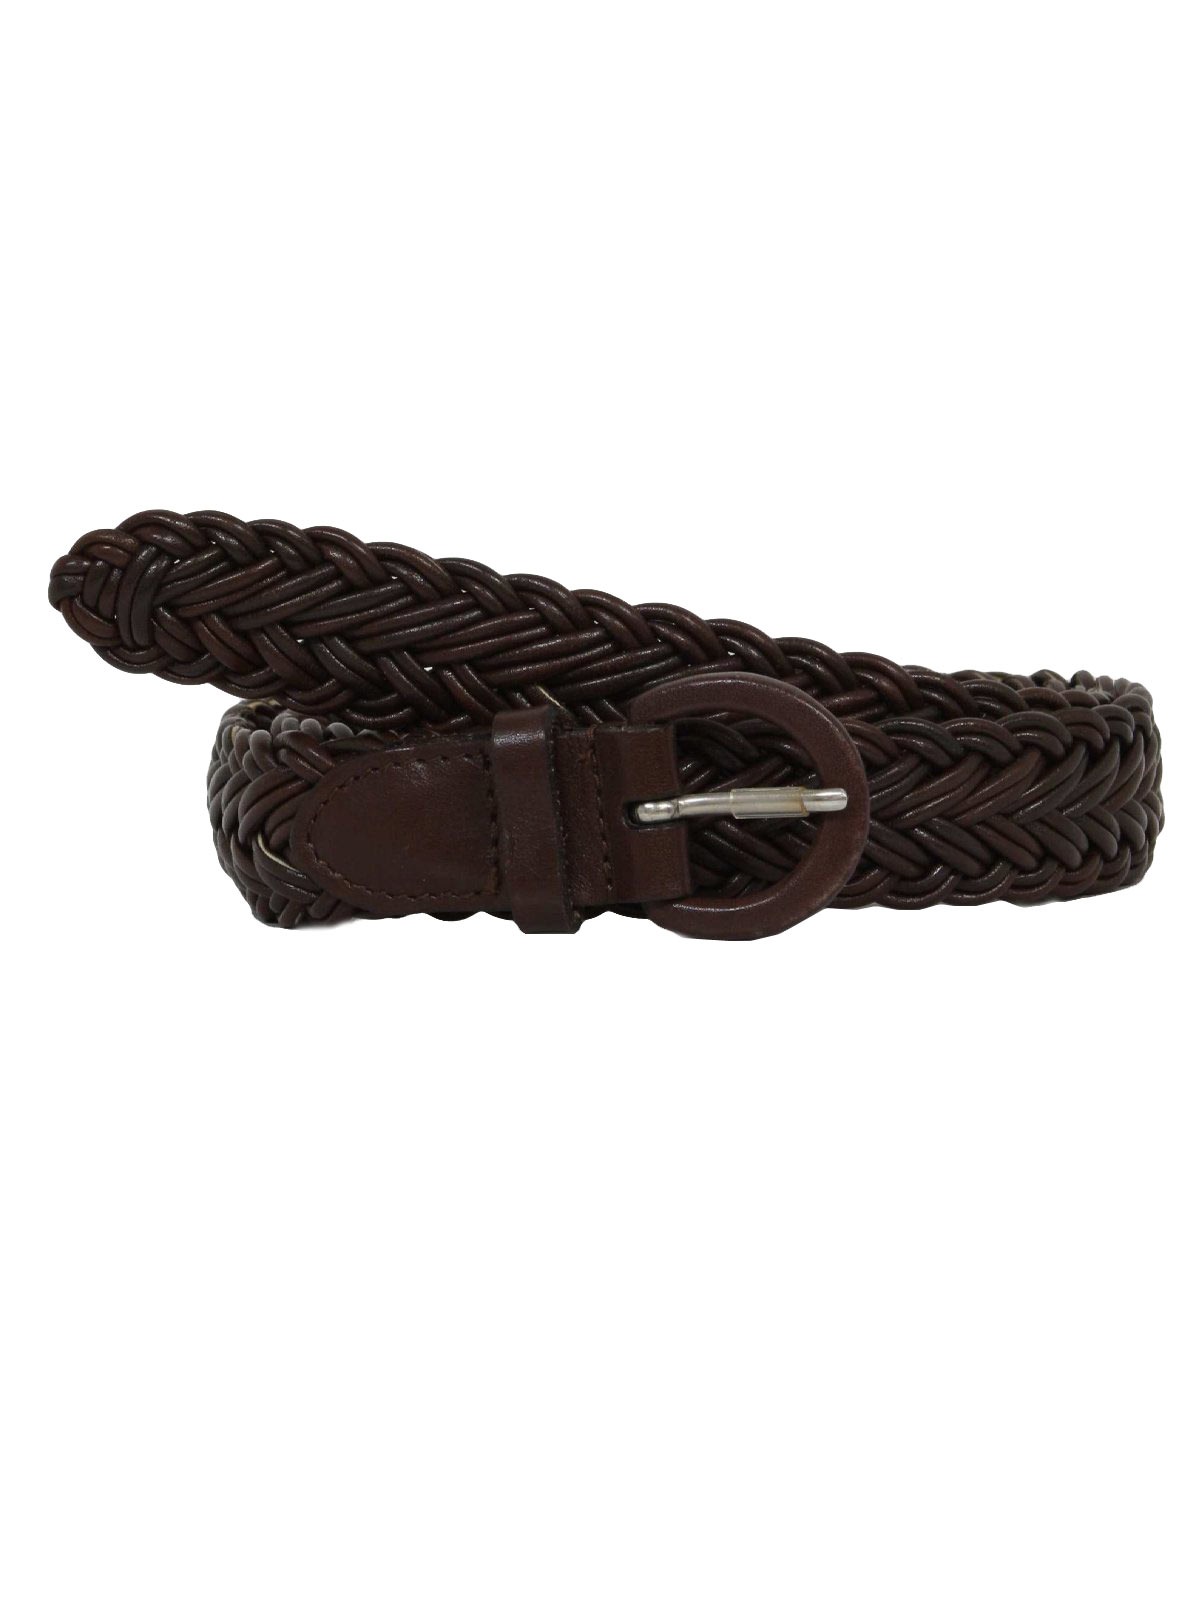 Talbots Nineties Vintage Belt: 90s -Talbots- Mens brown braided leather ...